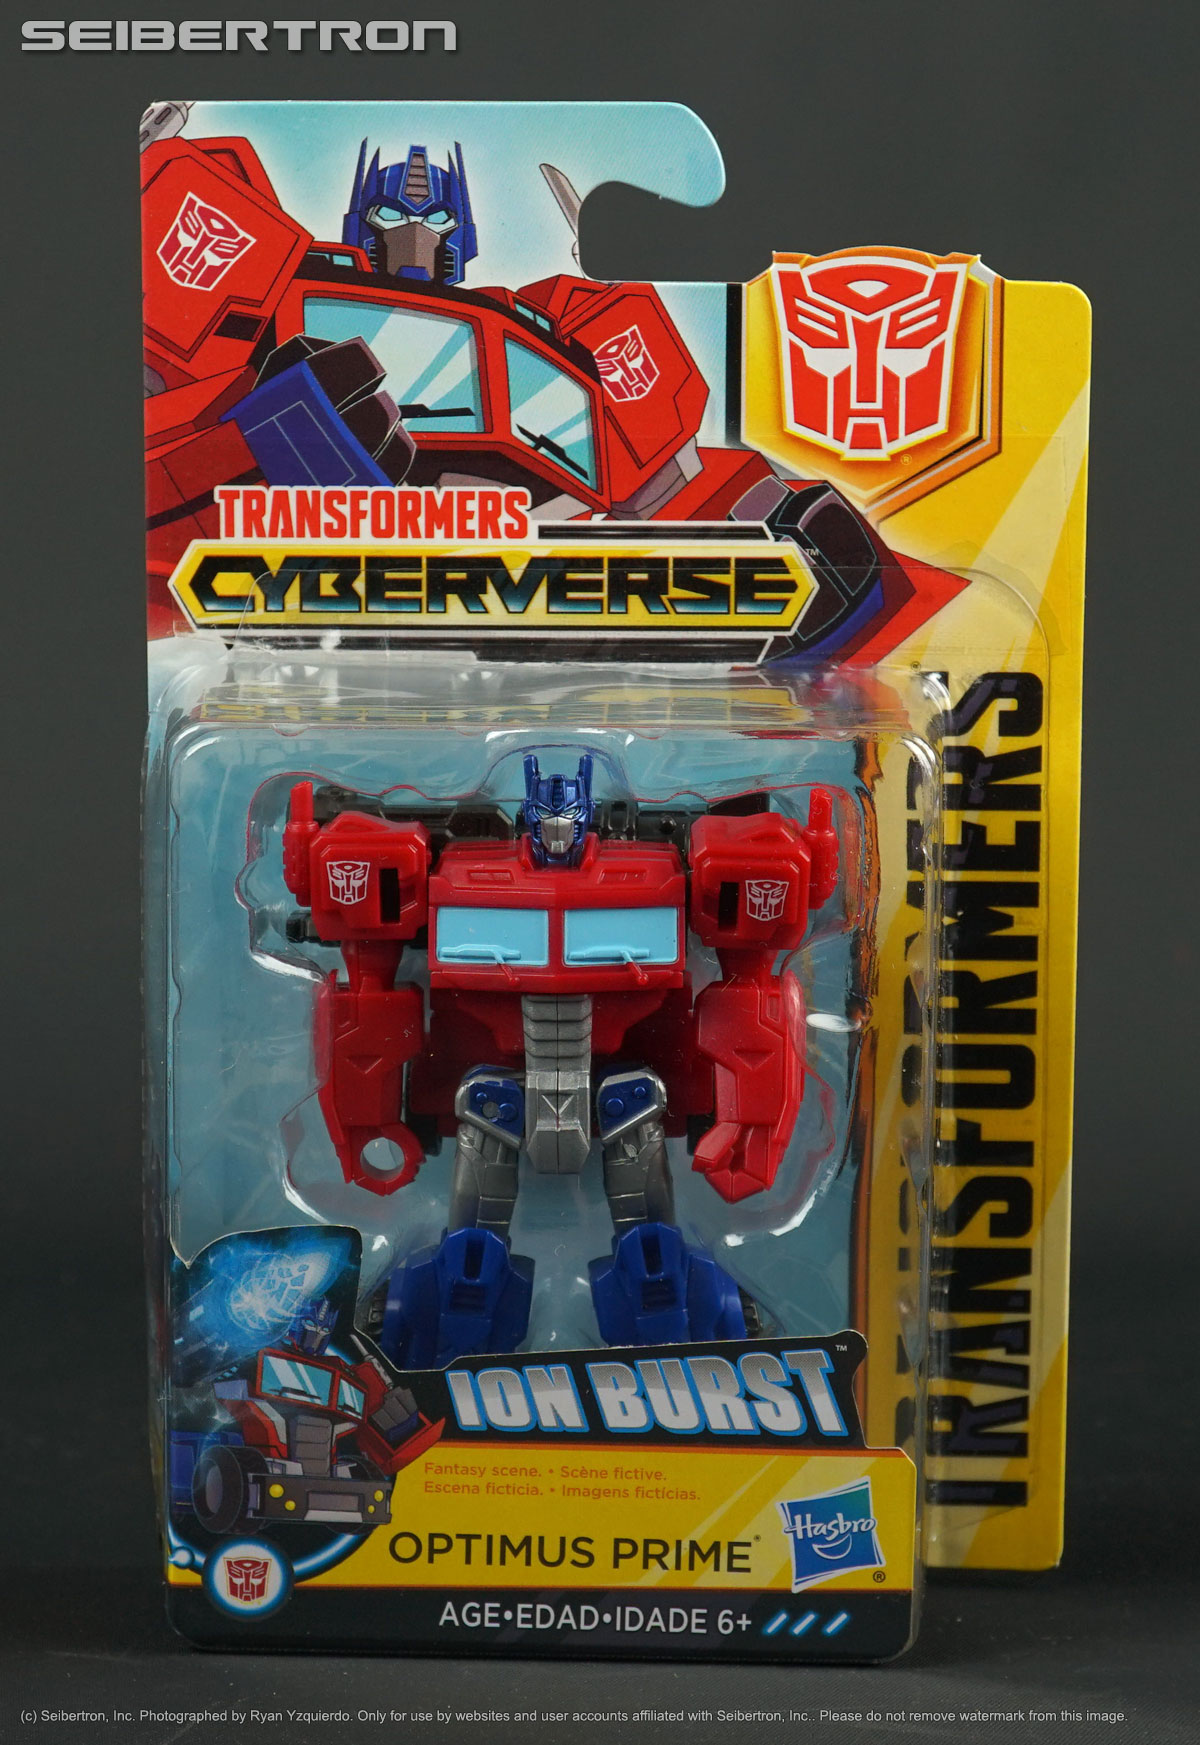 Ion Burst OPTIMUS PRIME Transformers Cyberverse Scout Class Hasbro 2018 New